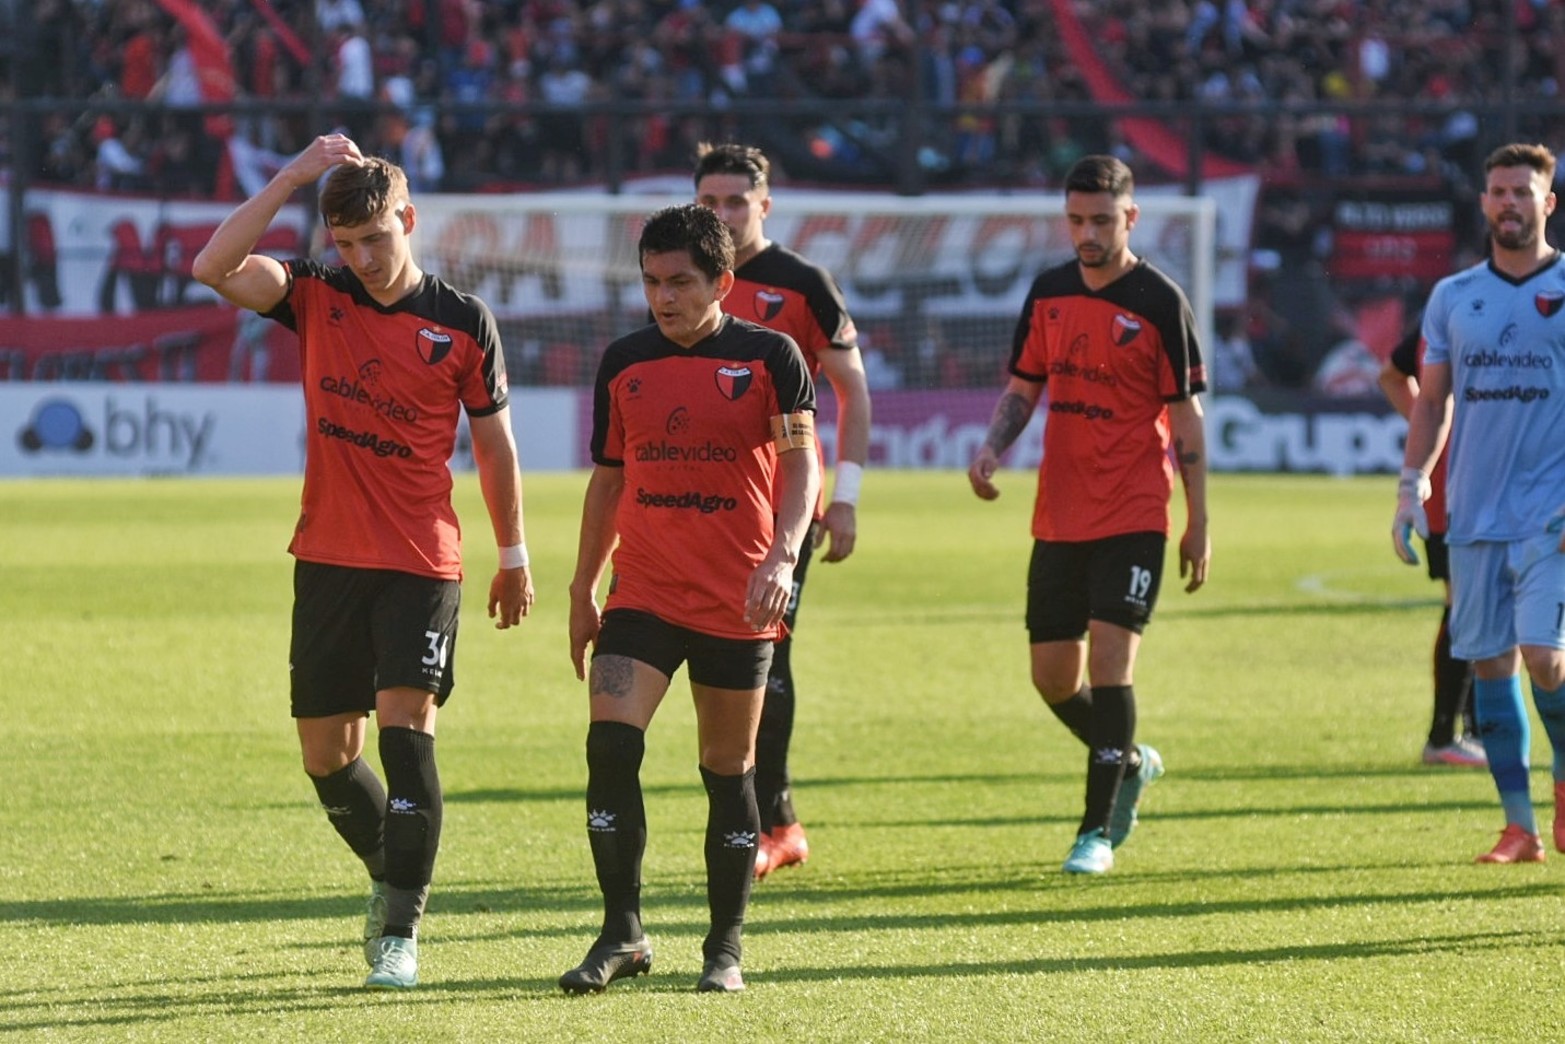 Colón - San Lorenzo Liga profesional. Final del primer tiempo. Foto: Pablo Aguirre